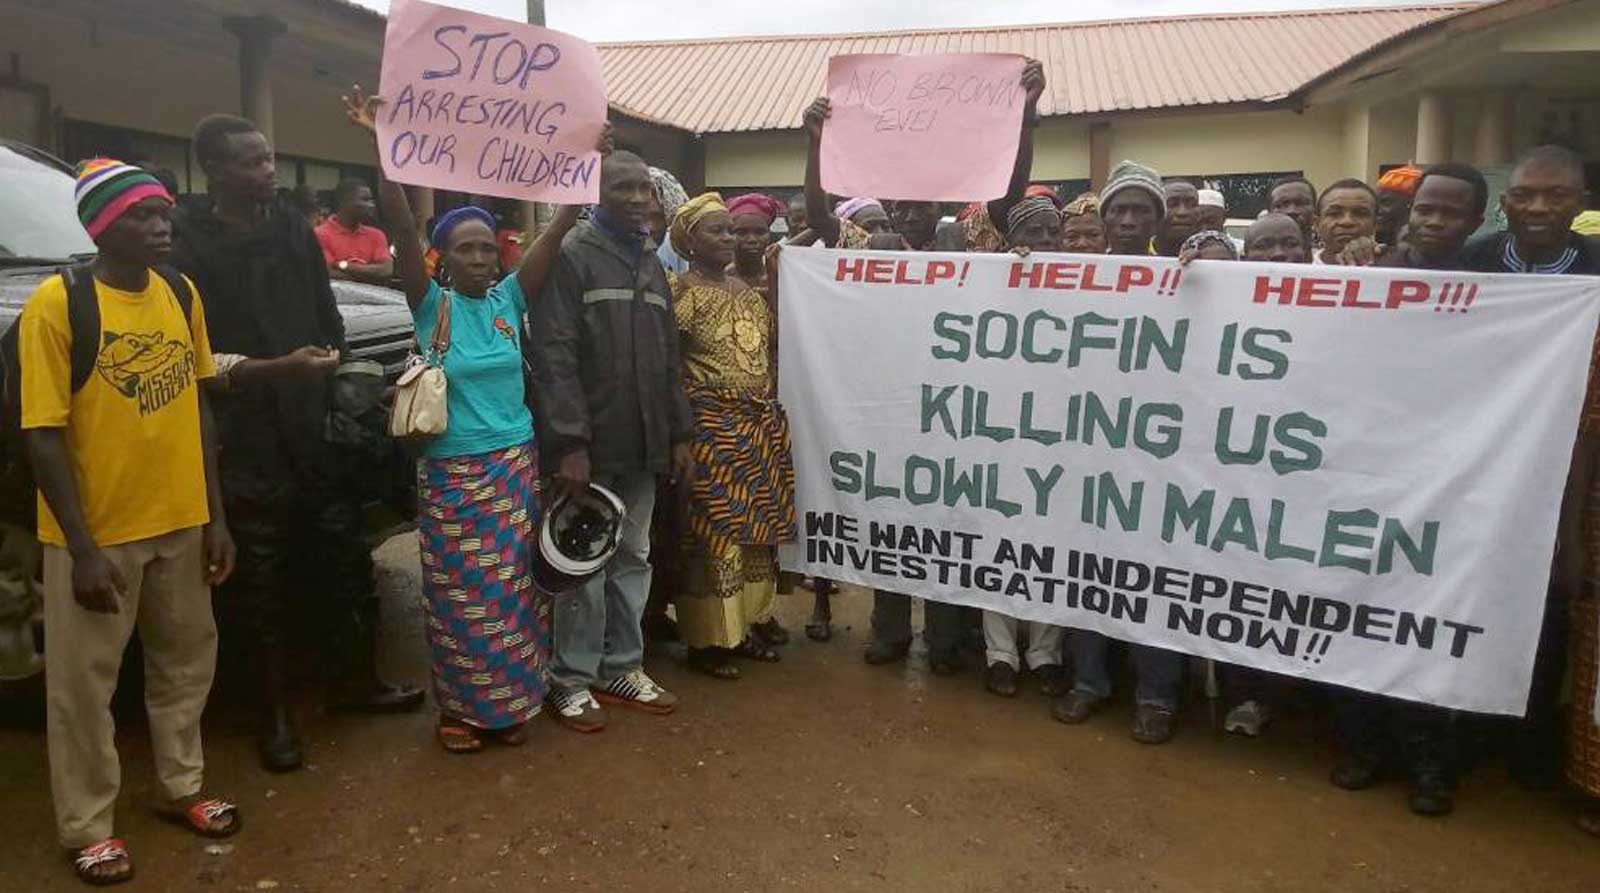 Protest against SOCFIN in Pujehun District, Malen Chiefdom, Sierra Leone.